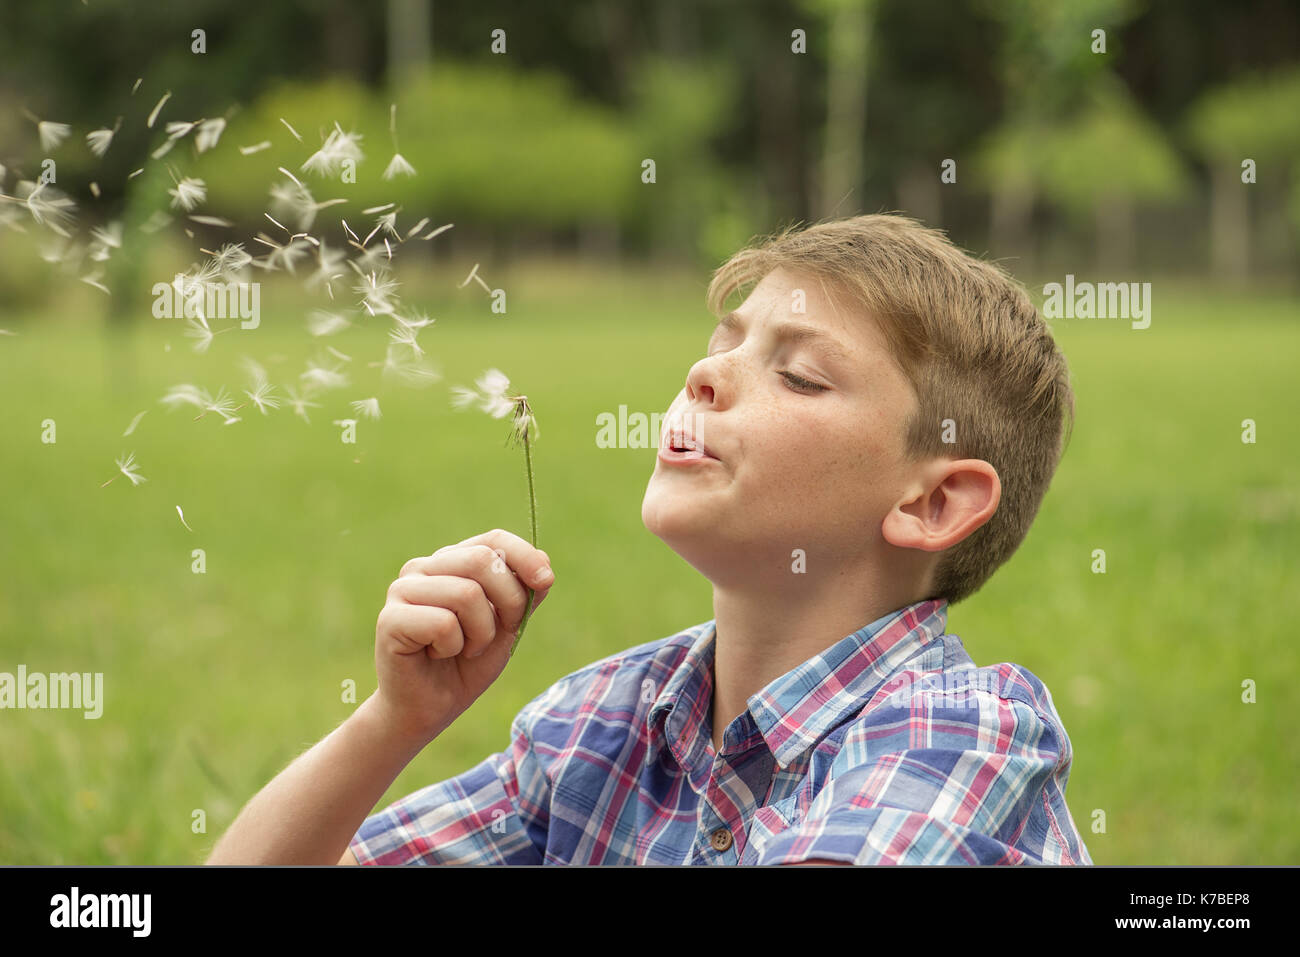 Boy blowing a dandelion Stock Photo